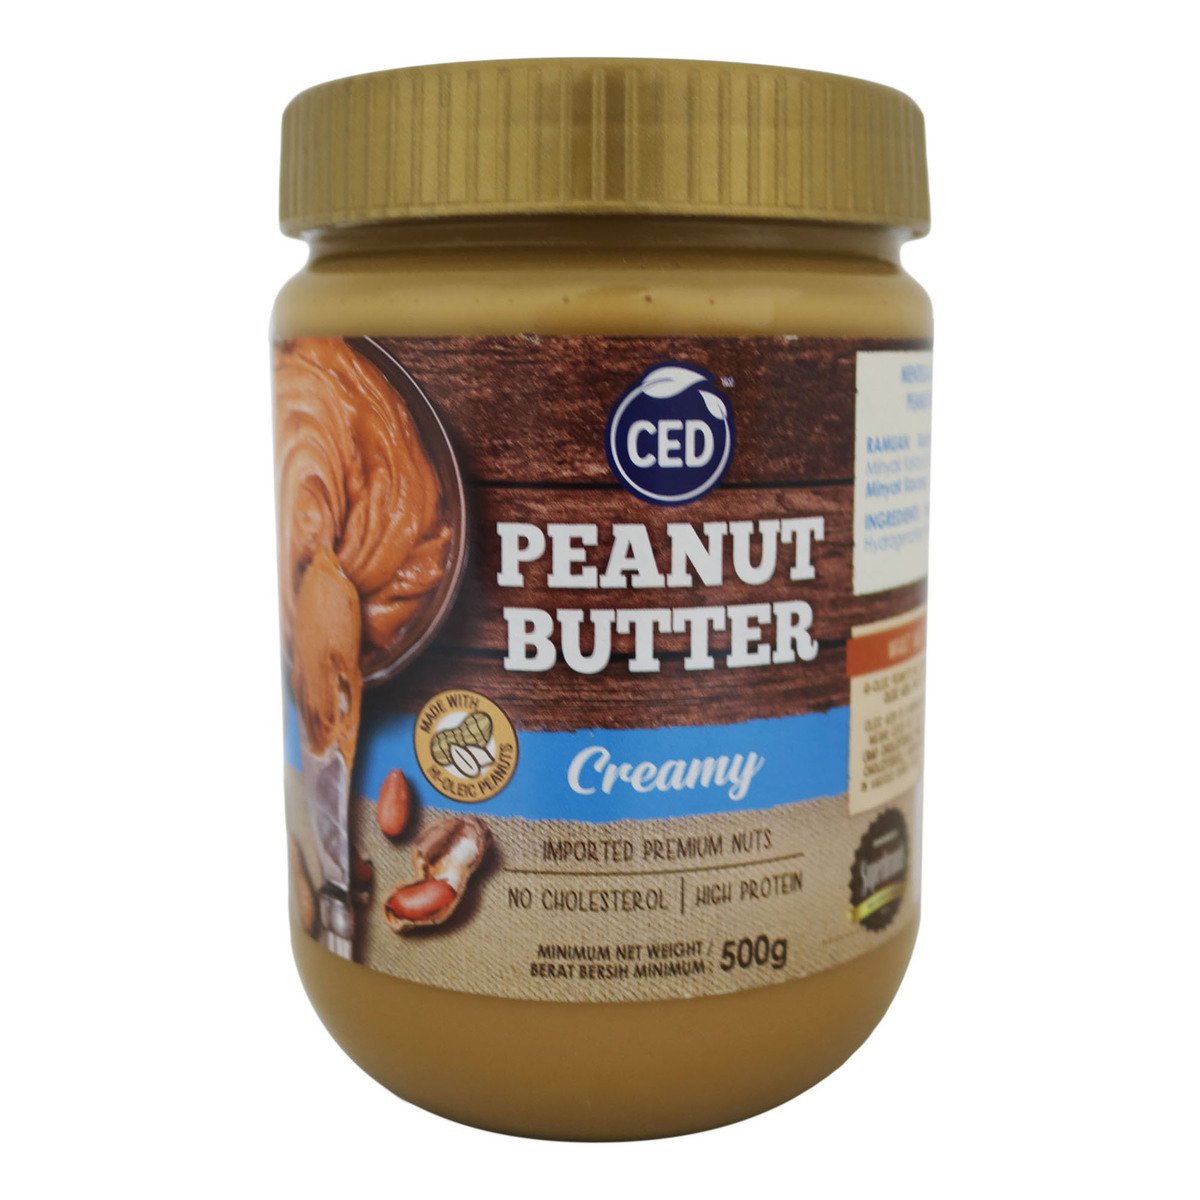 Ced Peanut Butter Creamy 500g